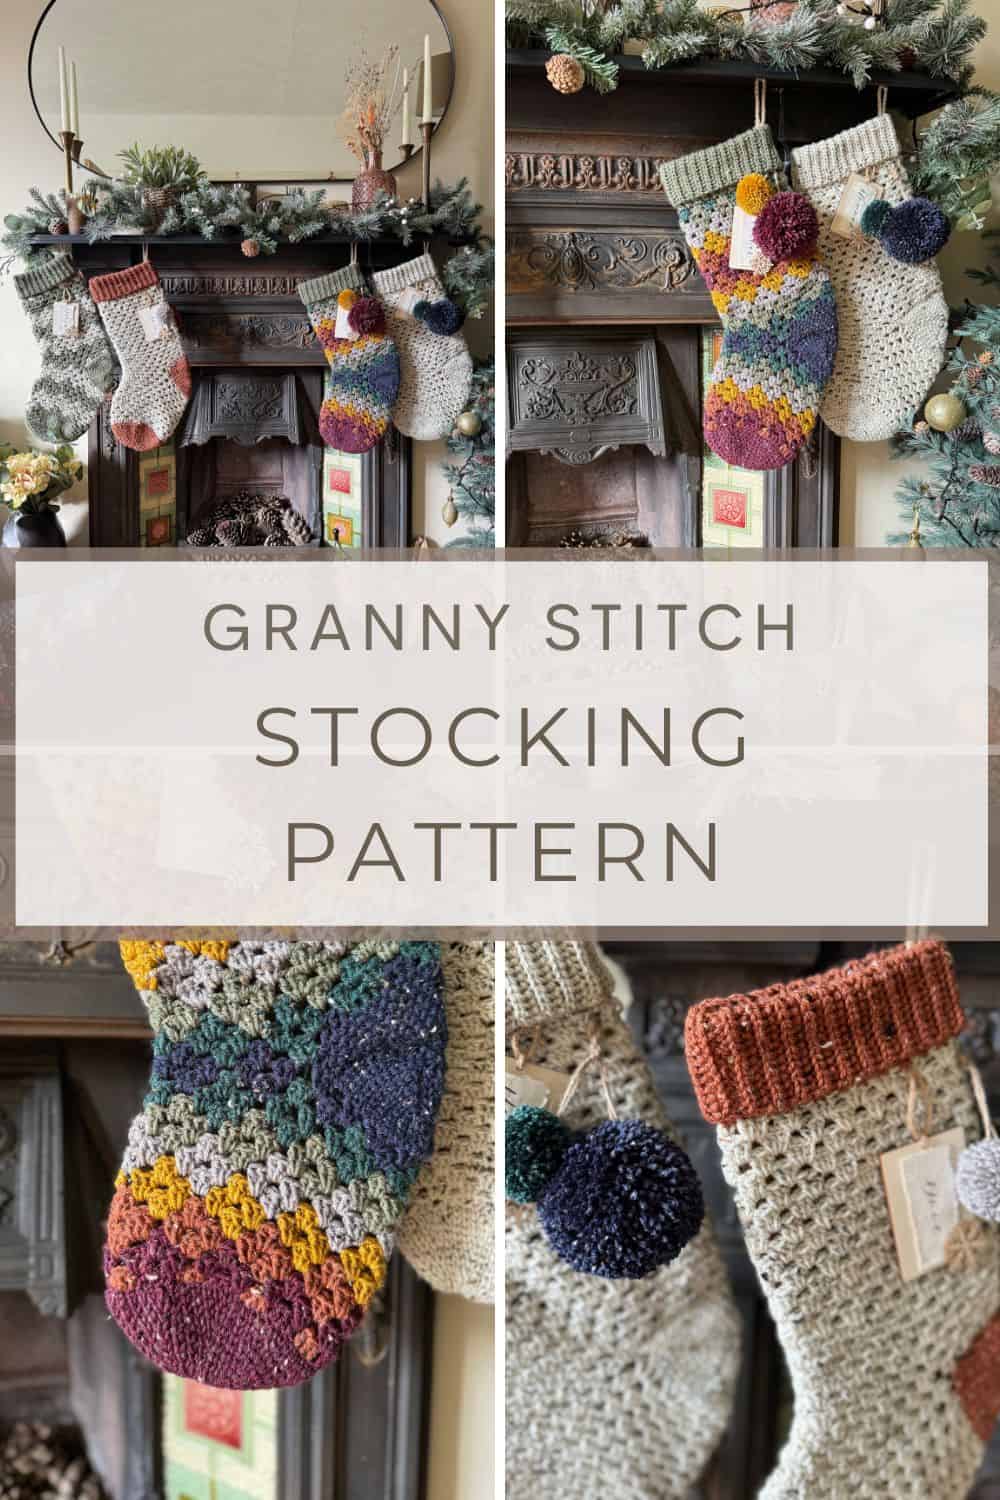 Granny stitch stocking pattern.